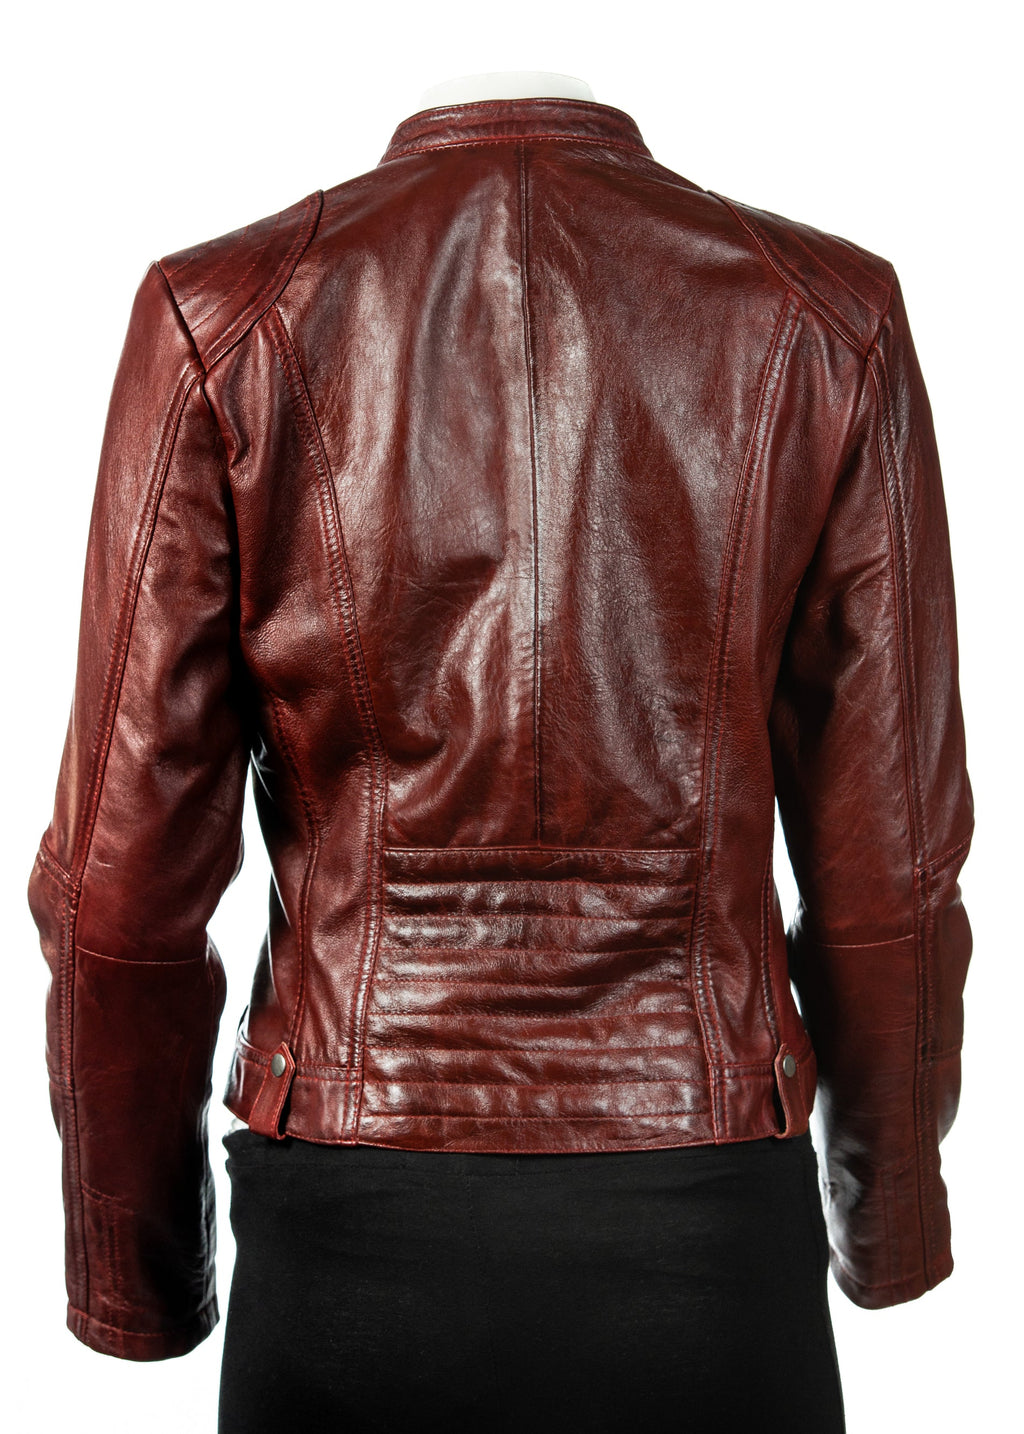 Ladies Black Biker Style Leather Jacket: Greta